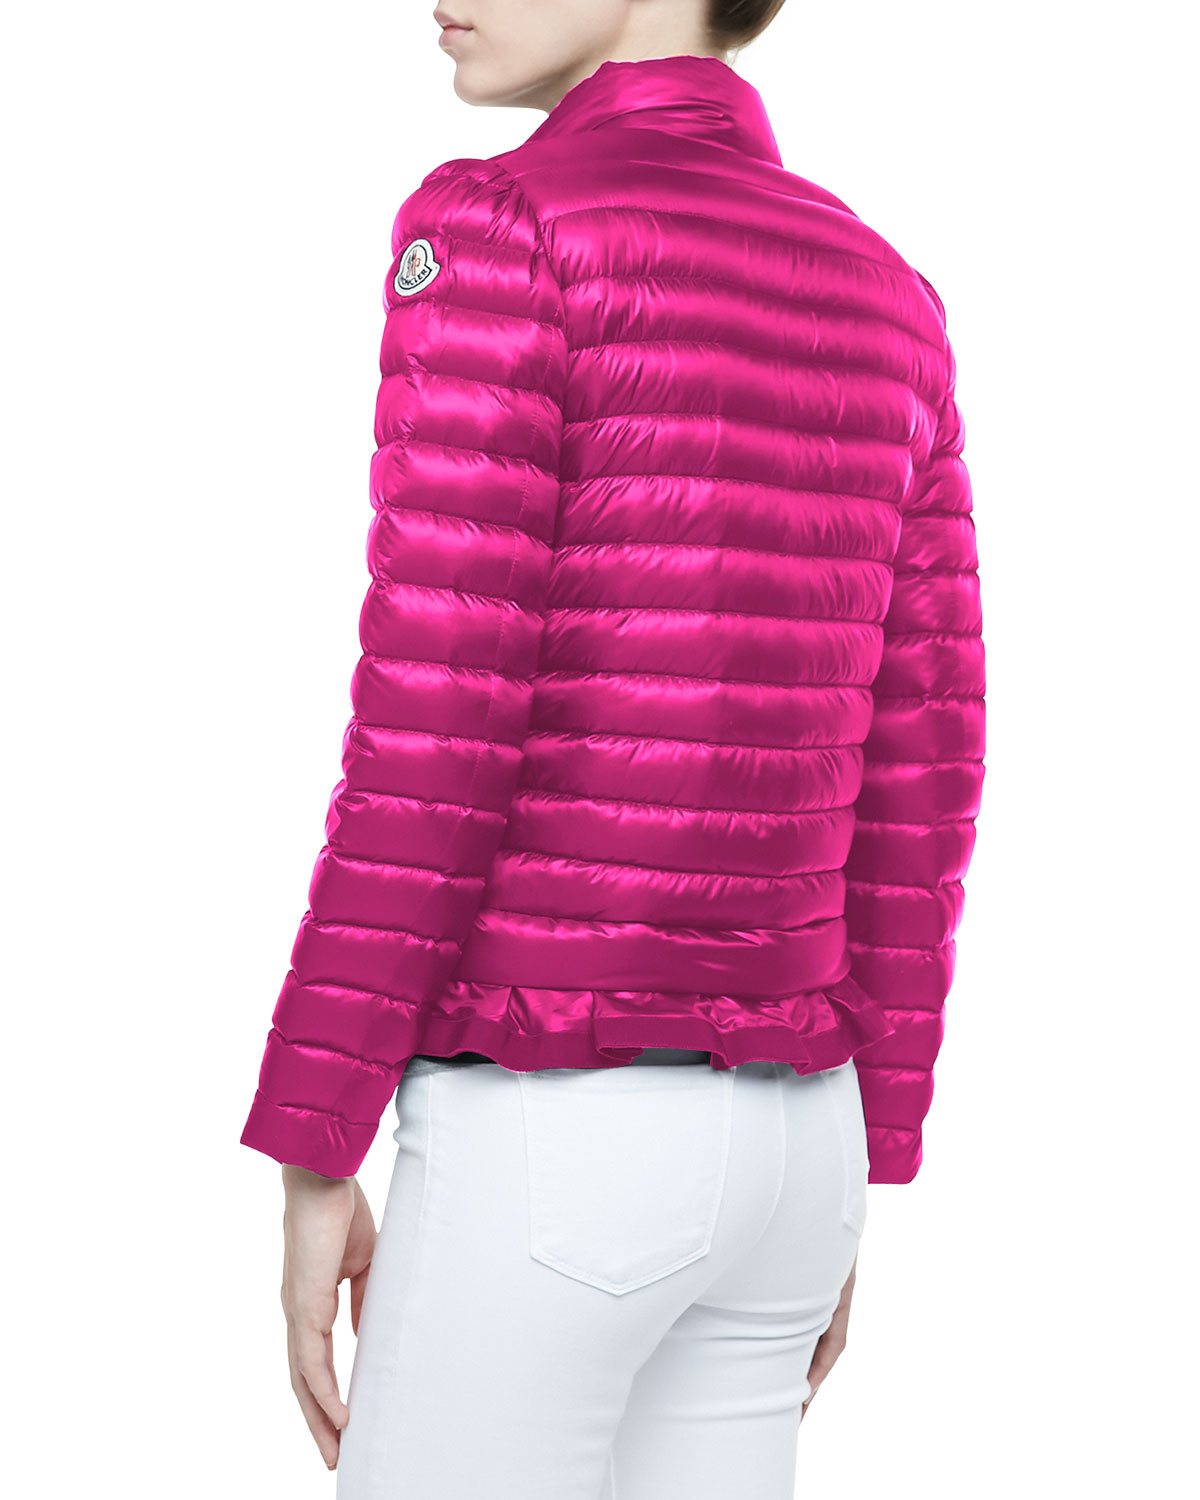 Lyst - Moncler Peplum Puffer Jacket in Pink